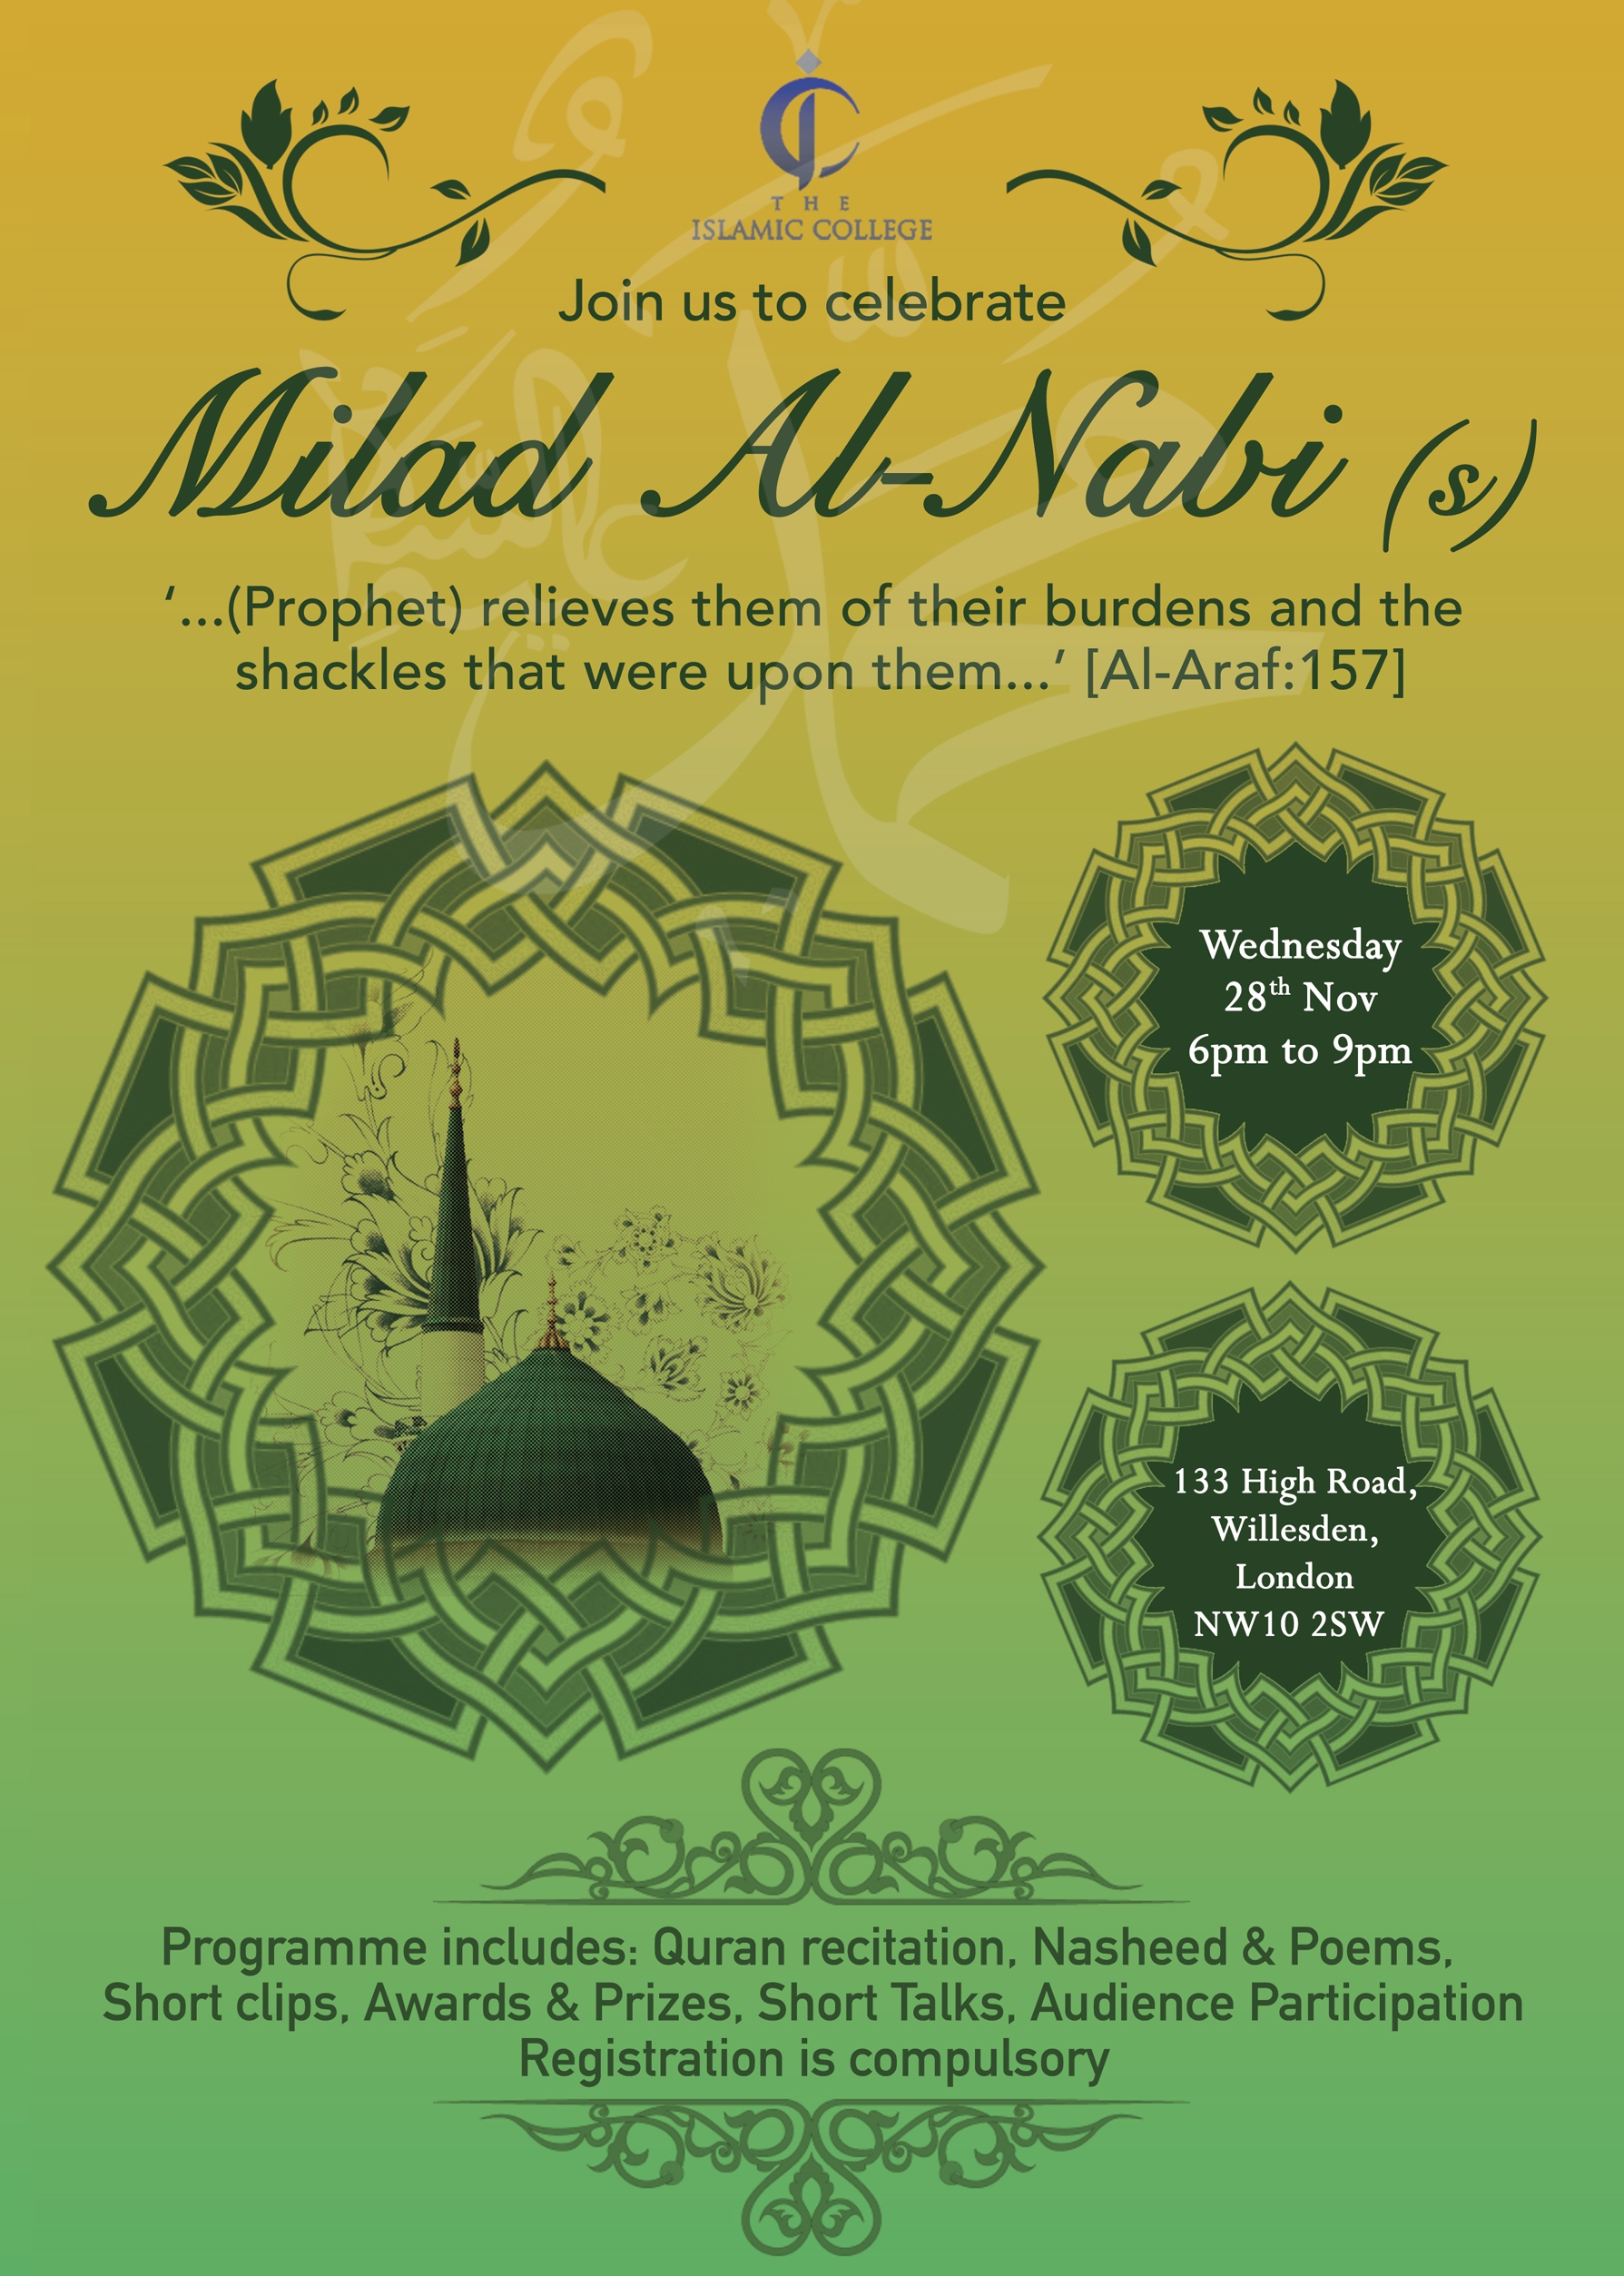 Milad al-Nabi Event at the Islamic College